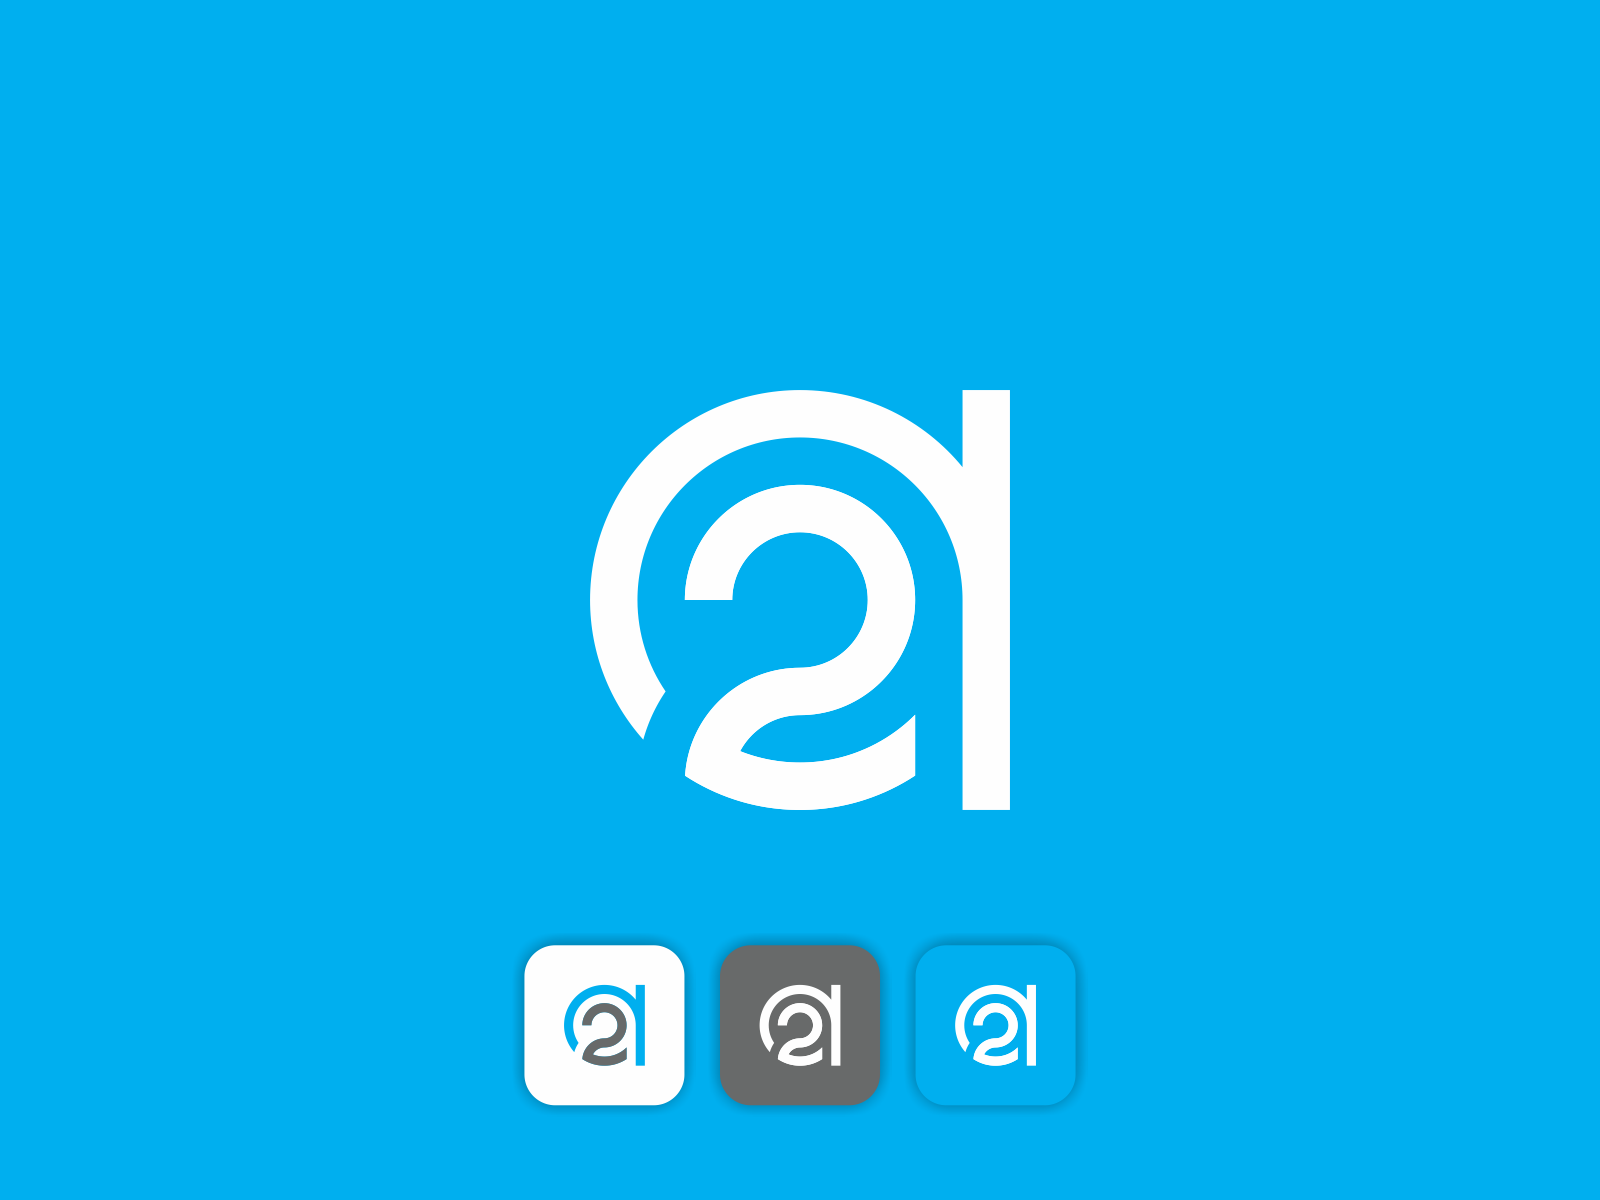 A2 logo | Logo Design Gallery Inspiration | LogoMix